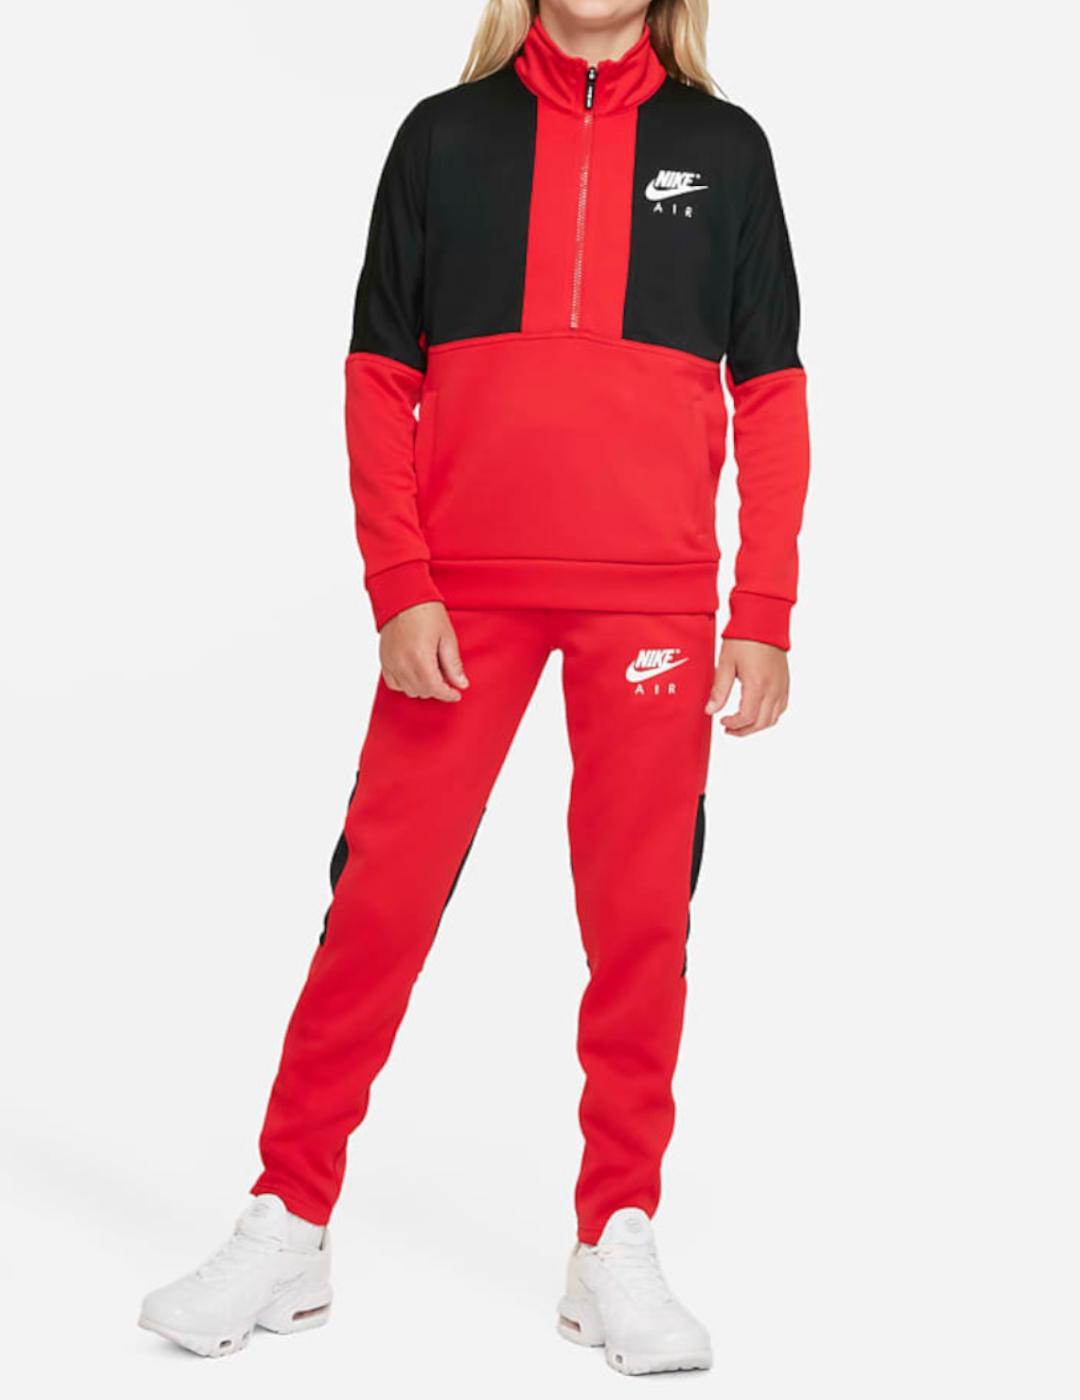 Chandal Nike Air para Rojo